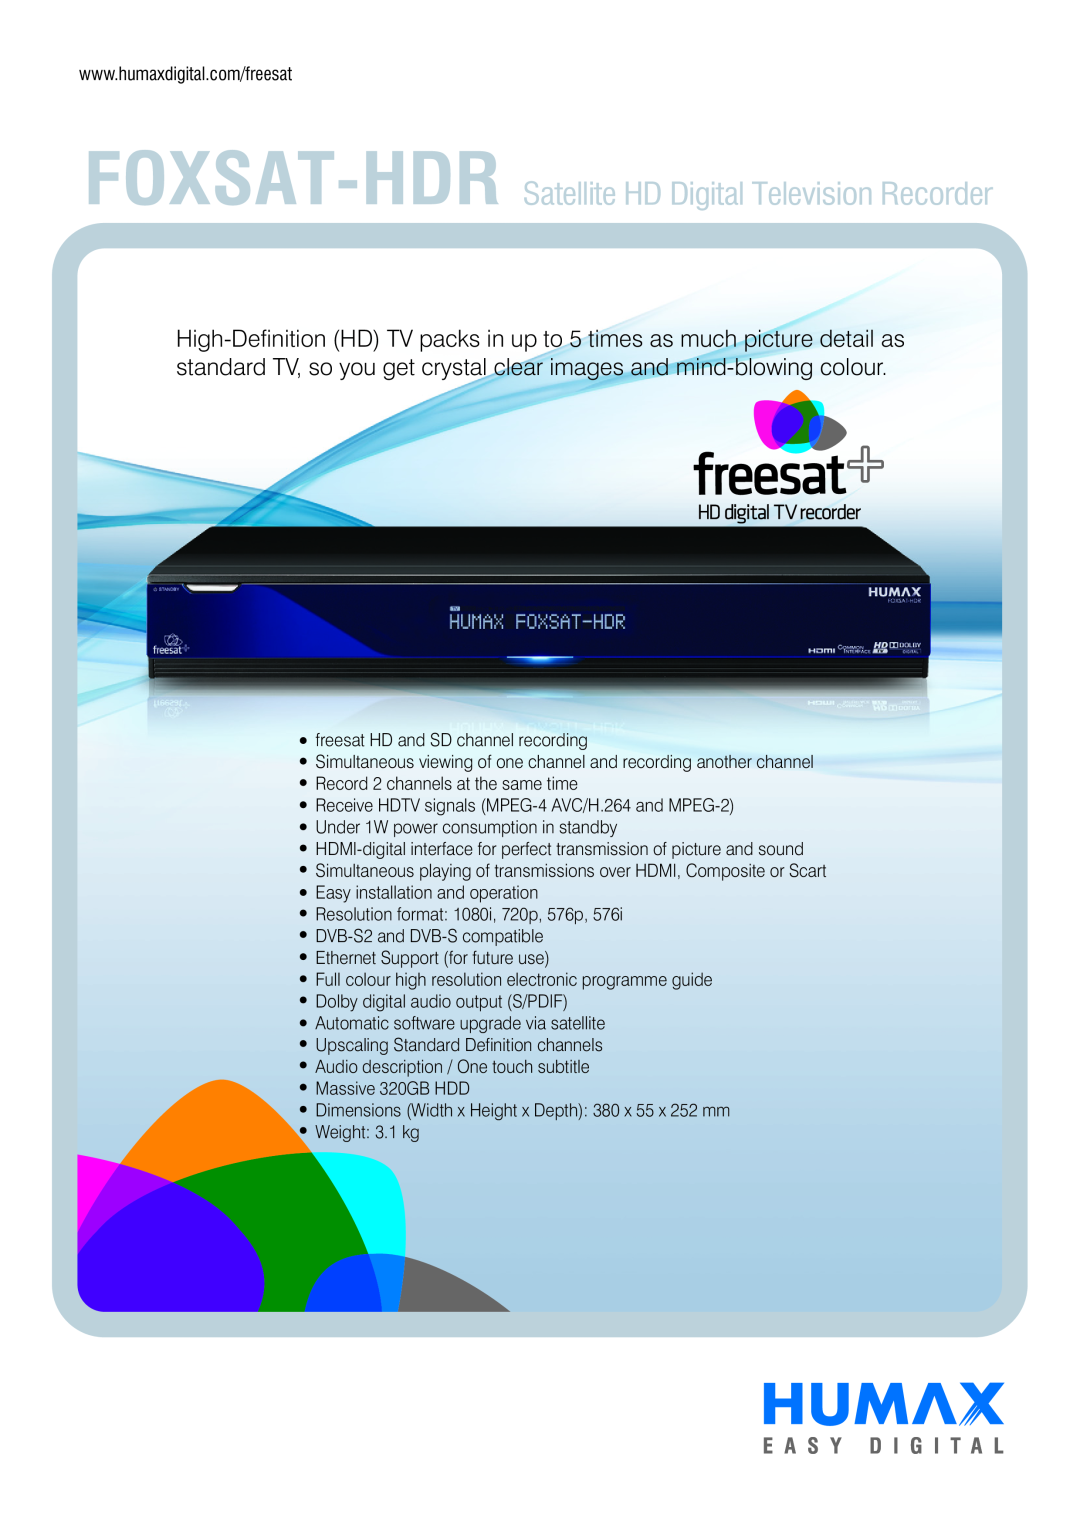 Humax manual FOXSAT-HDR Satellite HD Digital Television Recorder 